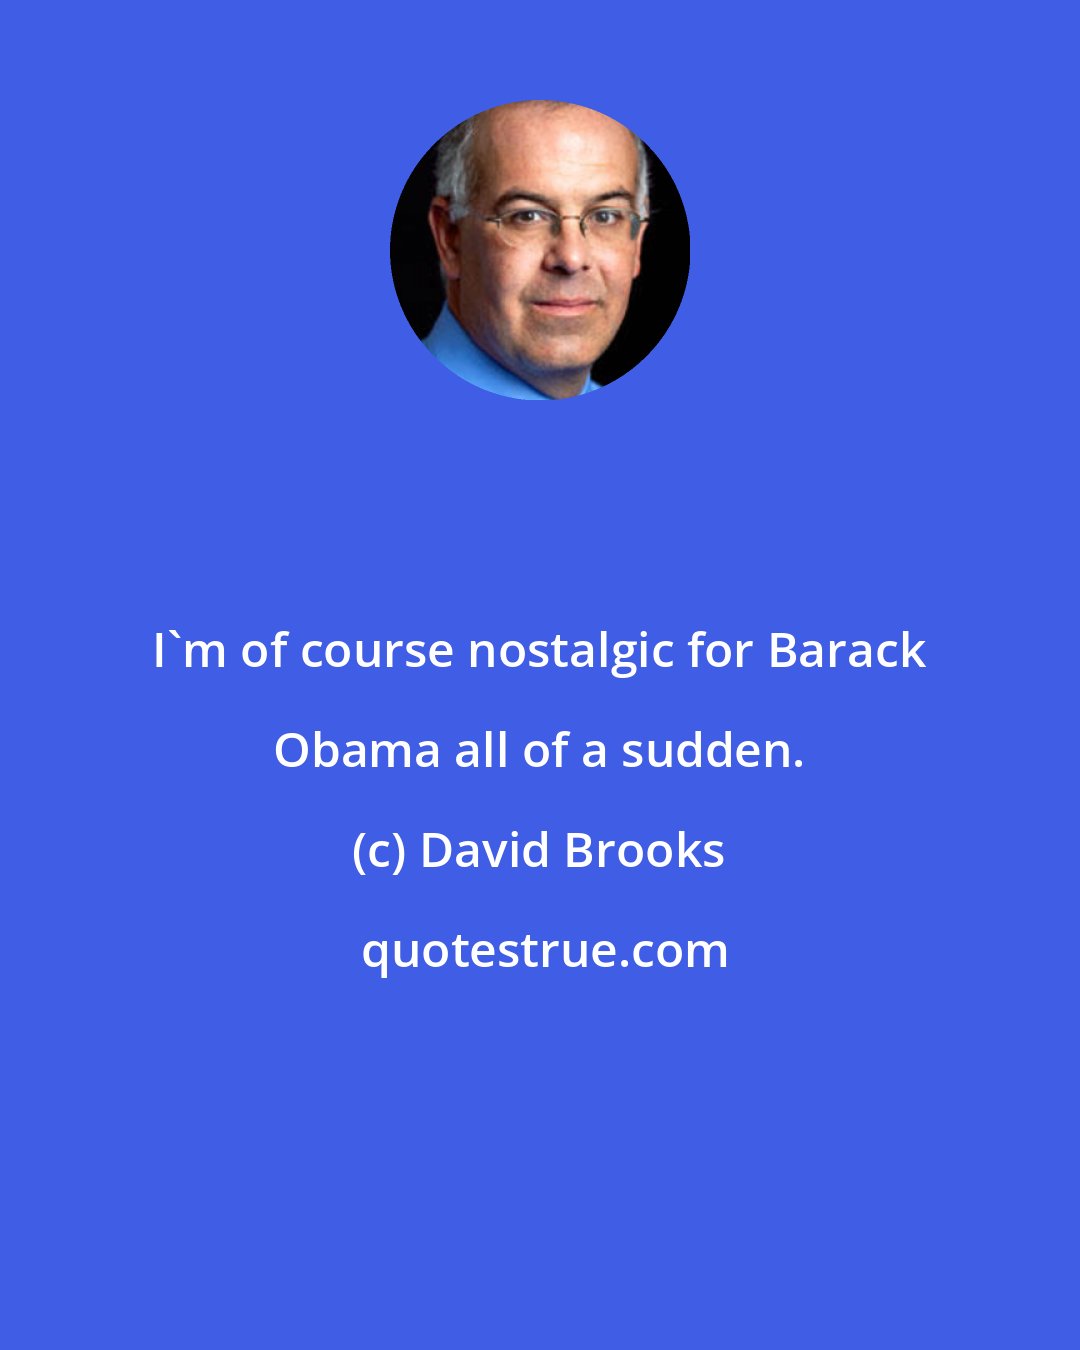 David Brooks: I'm of course nostalgic for Barack Obama all of a sudden.